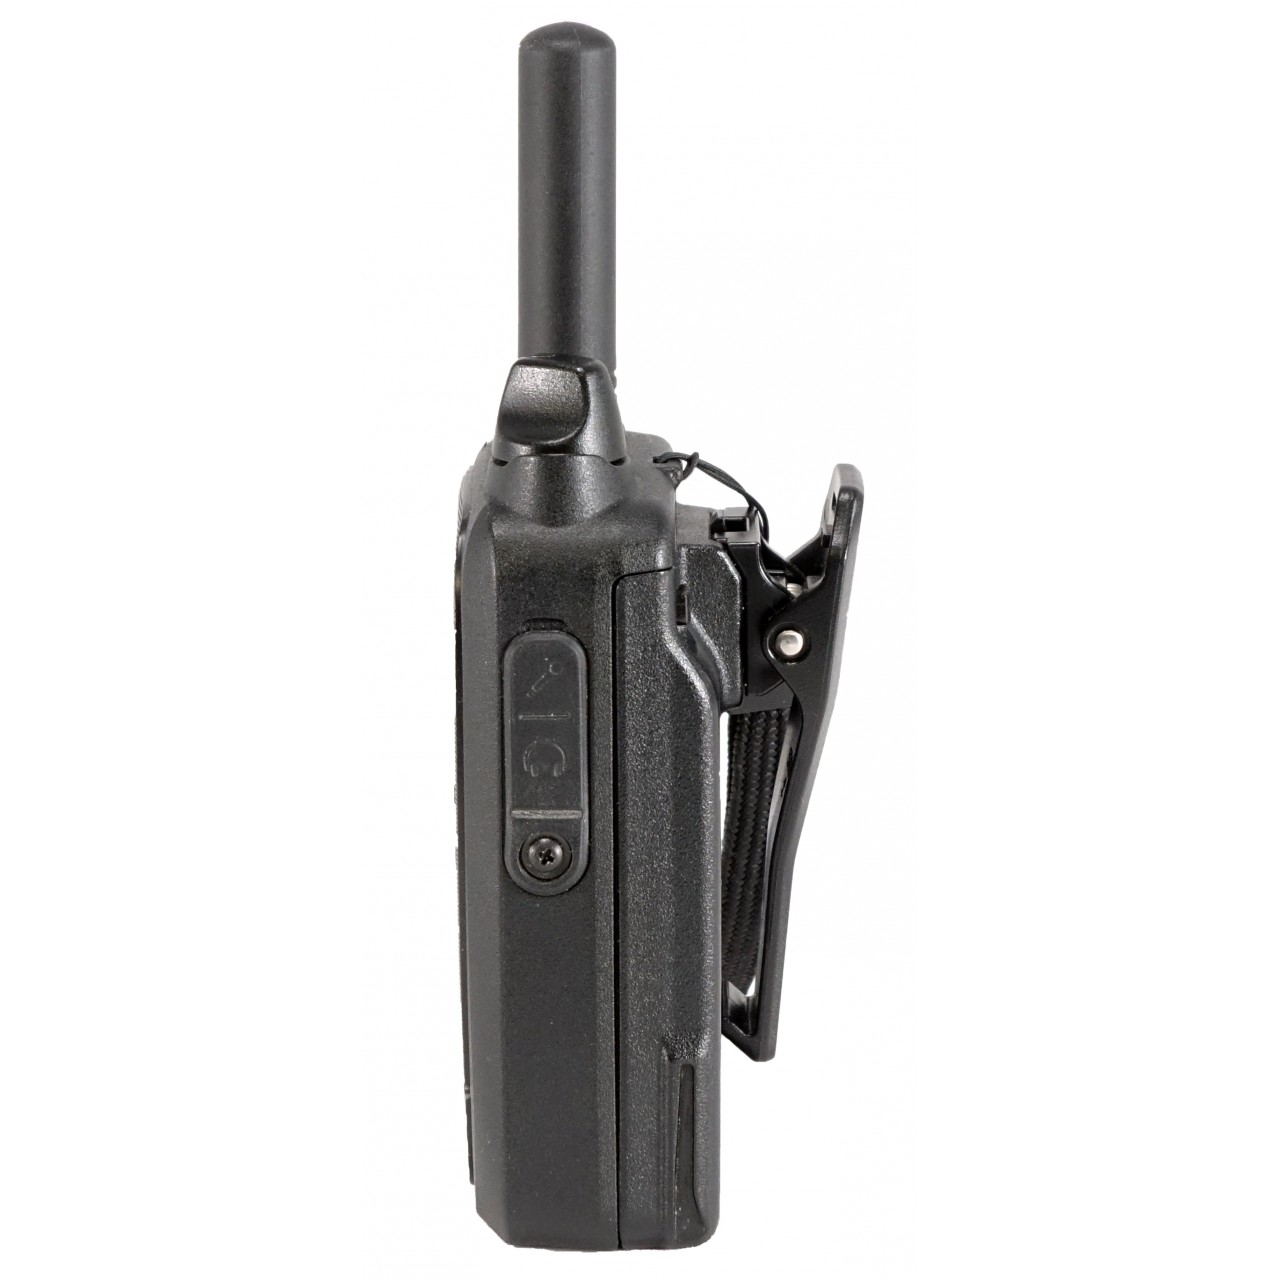 PACK-IP503H BASE Handhelds - ICOM